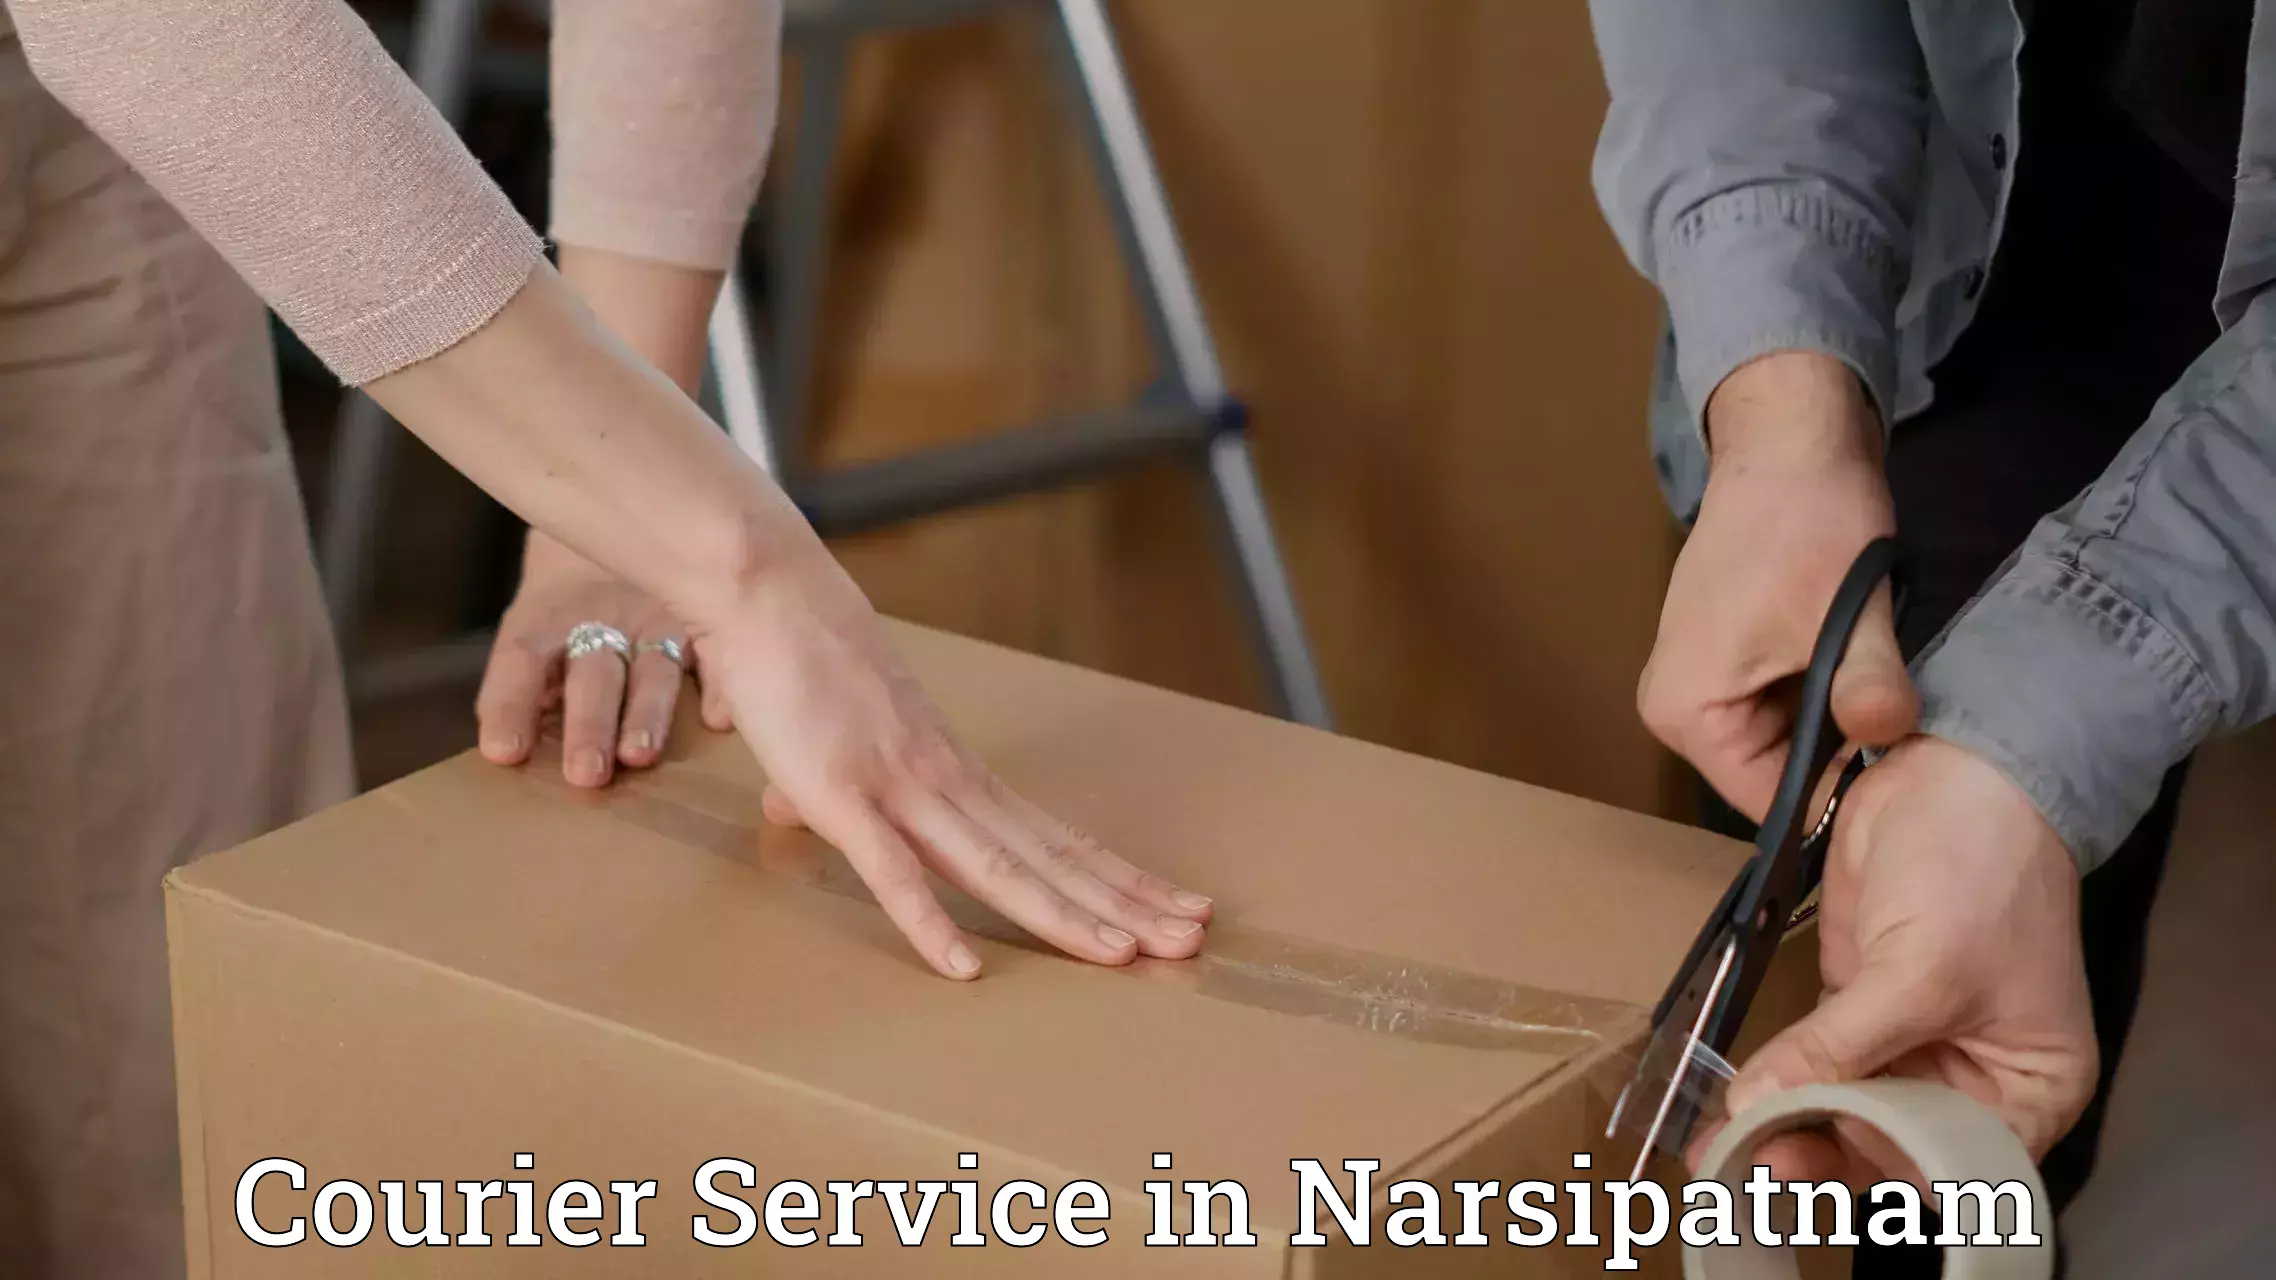 Customer-focused courier in Narsipatnam